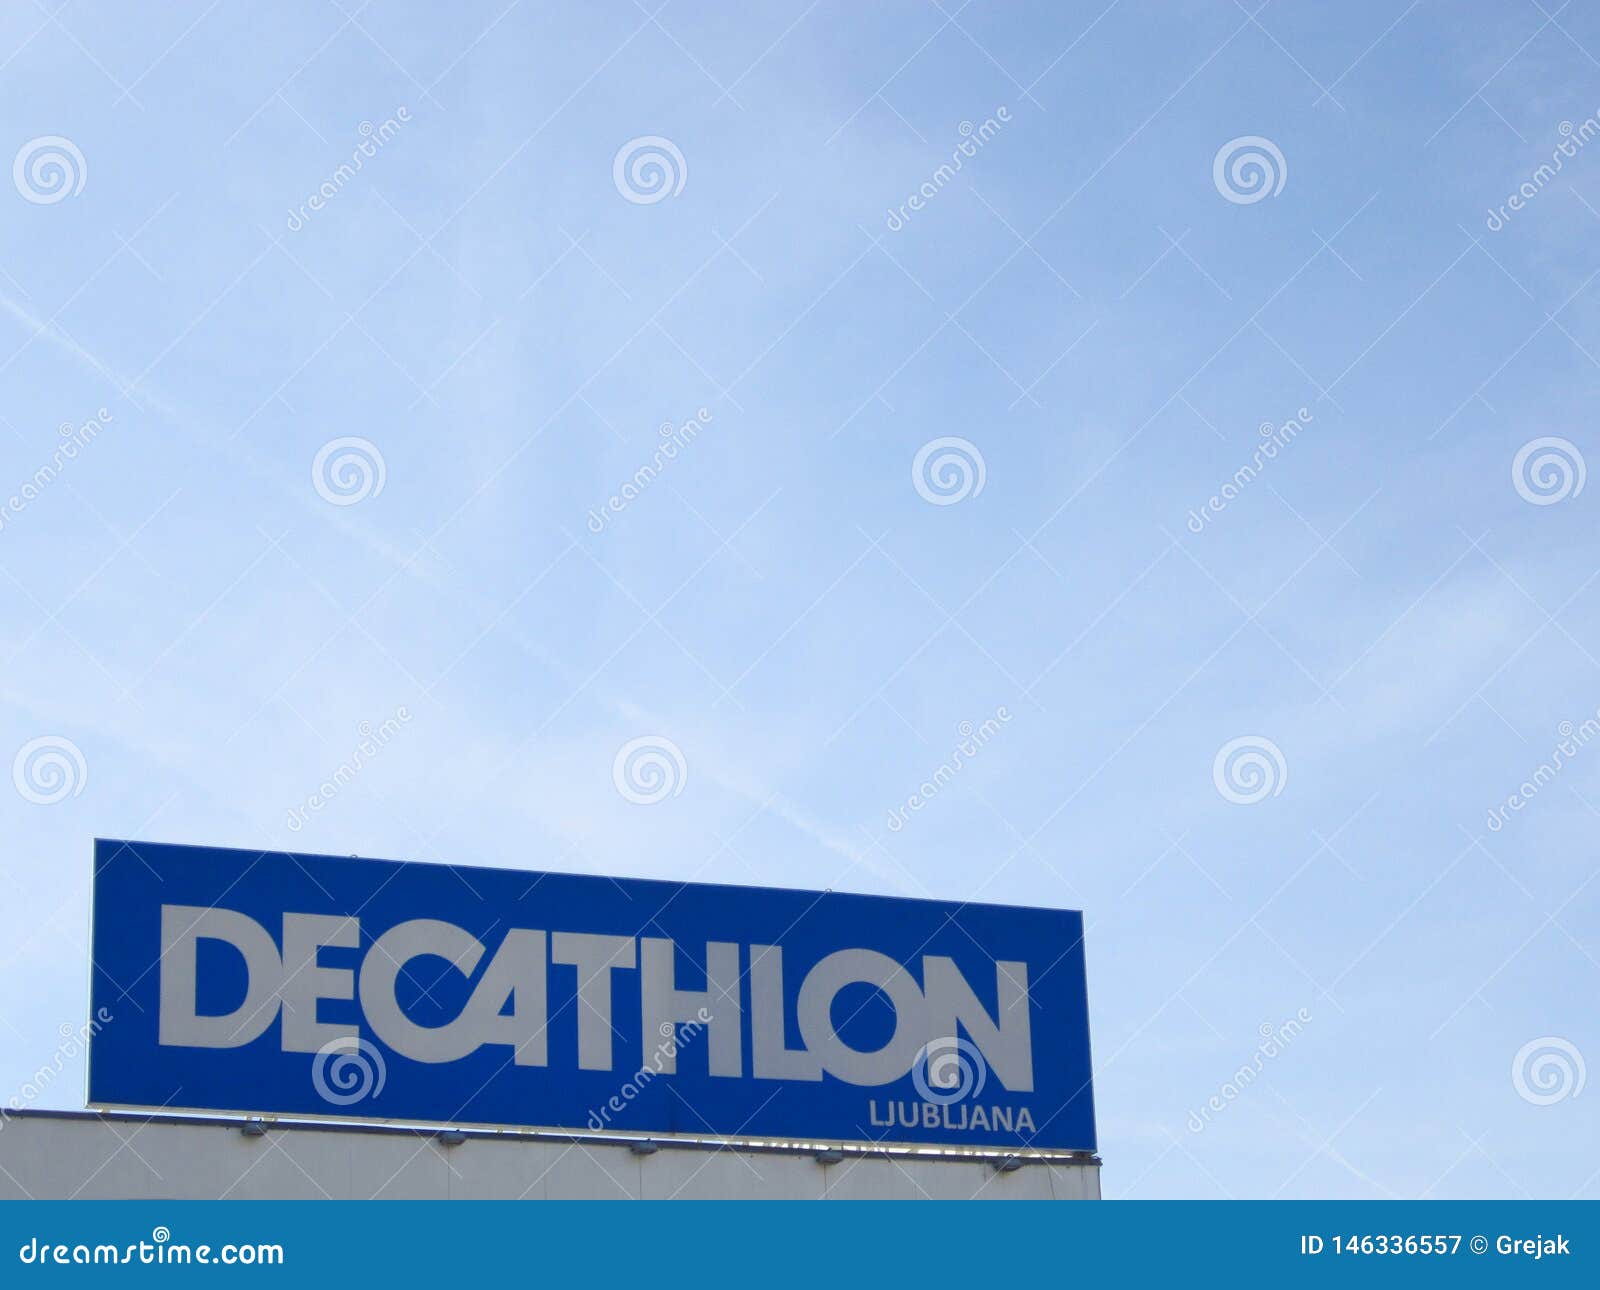 decathlon pa